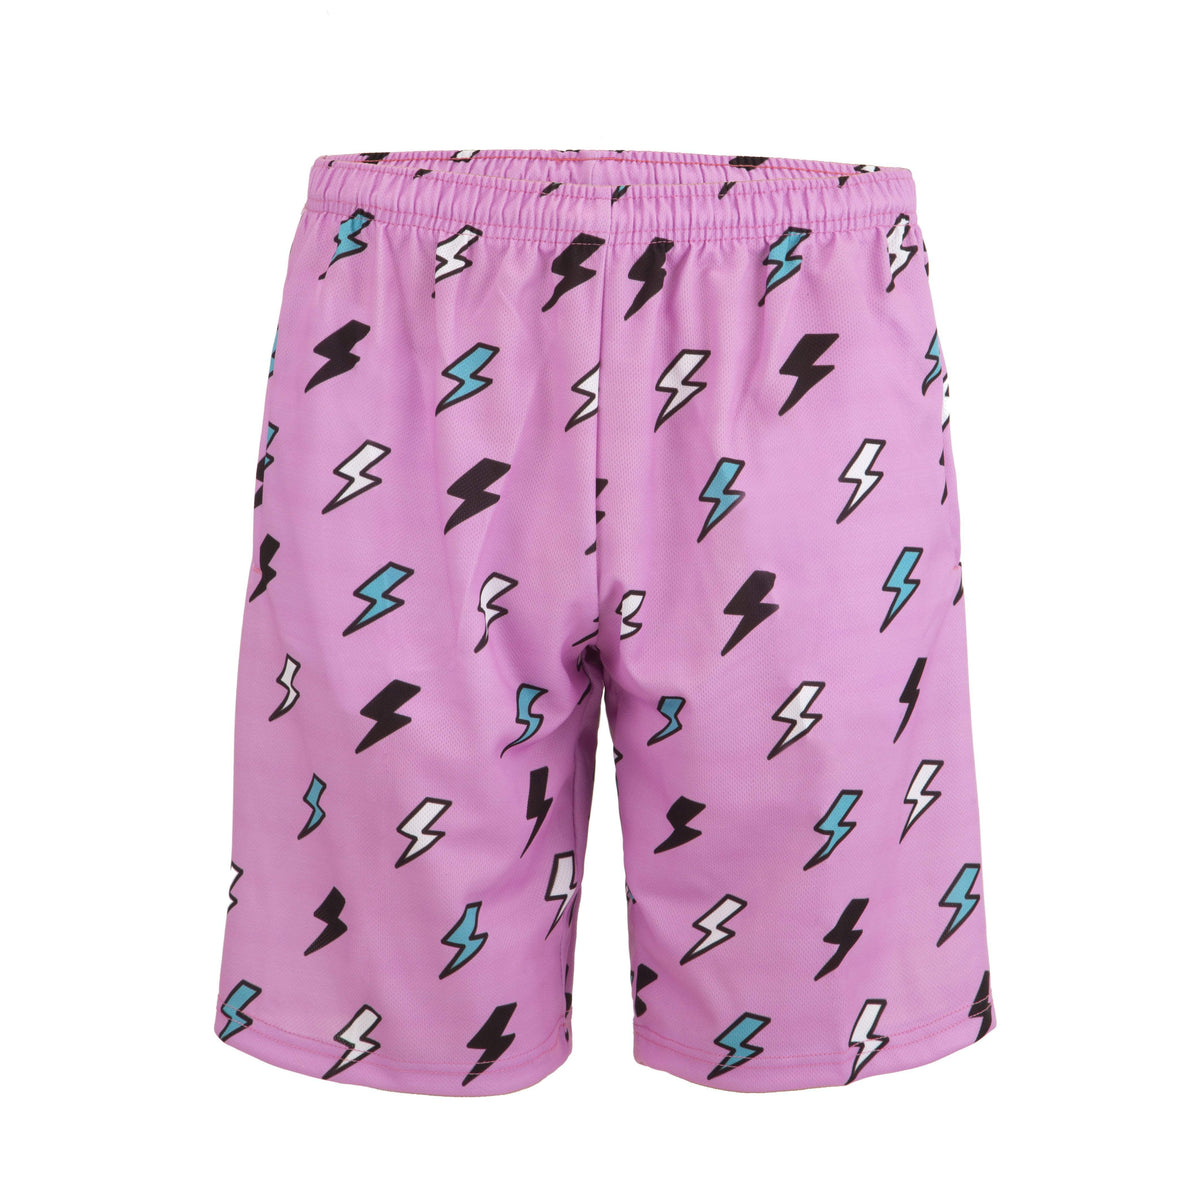 Miami Vice Pink Lacrosse Shorts – Crosse Shorts